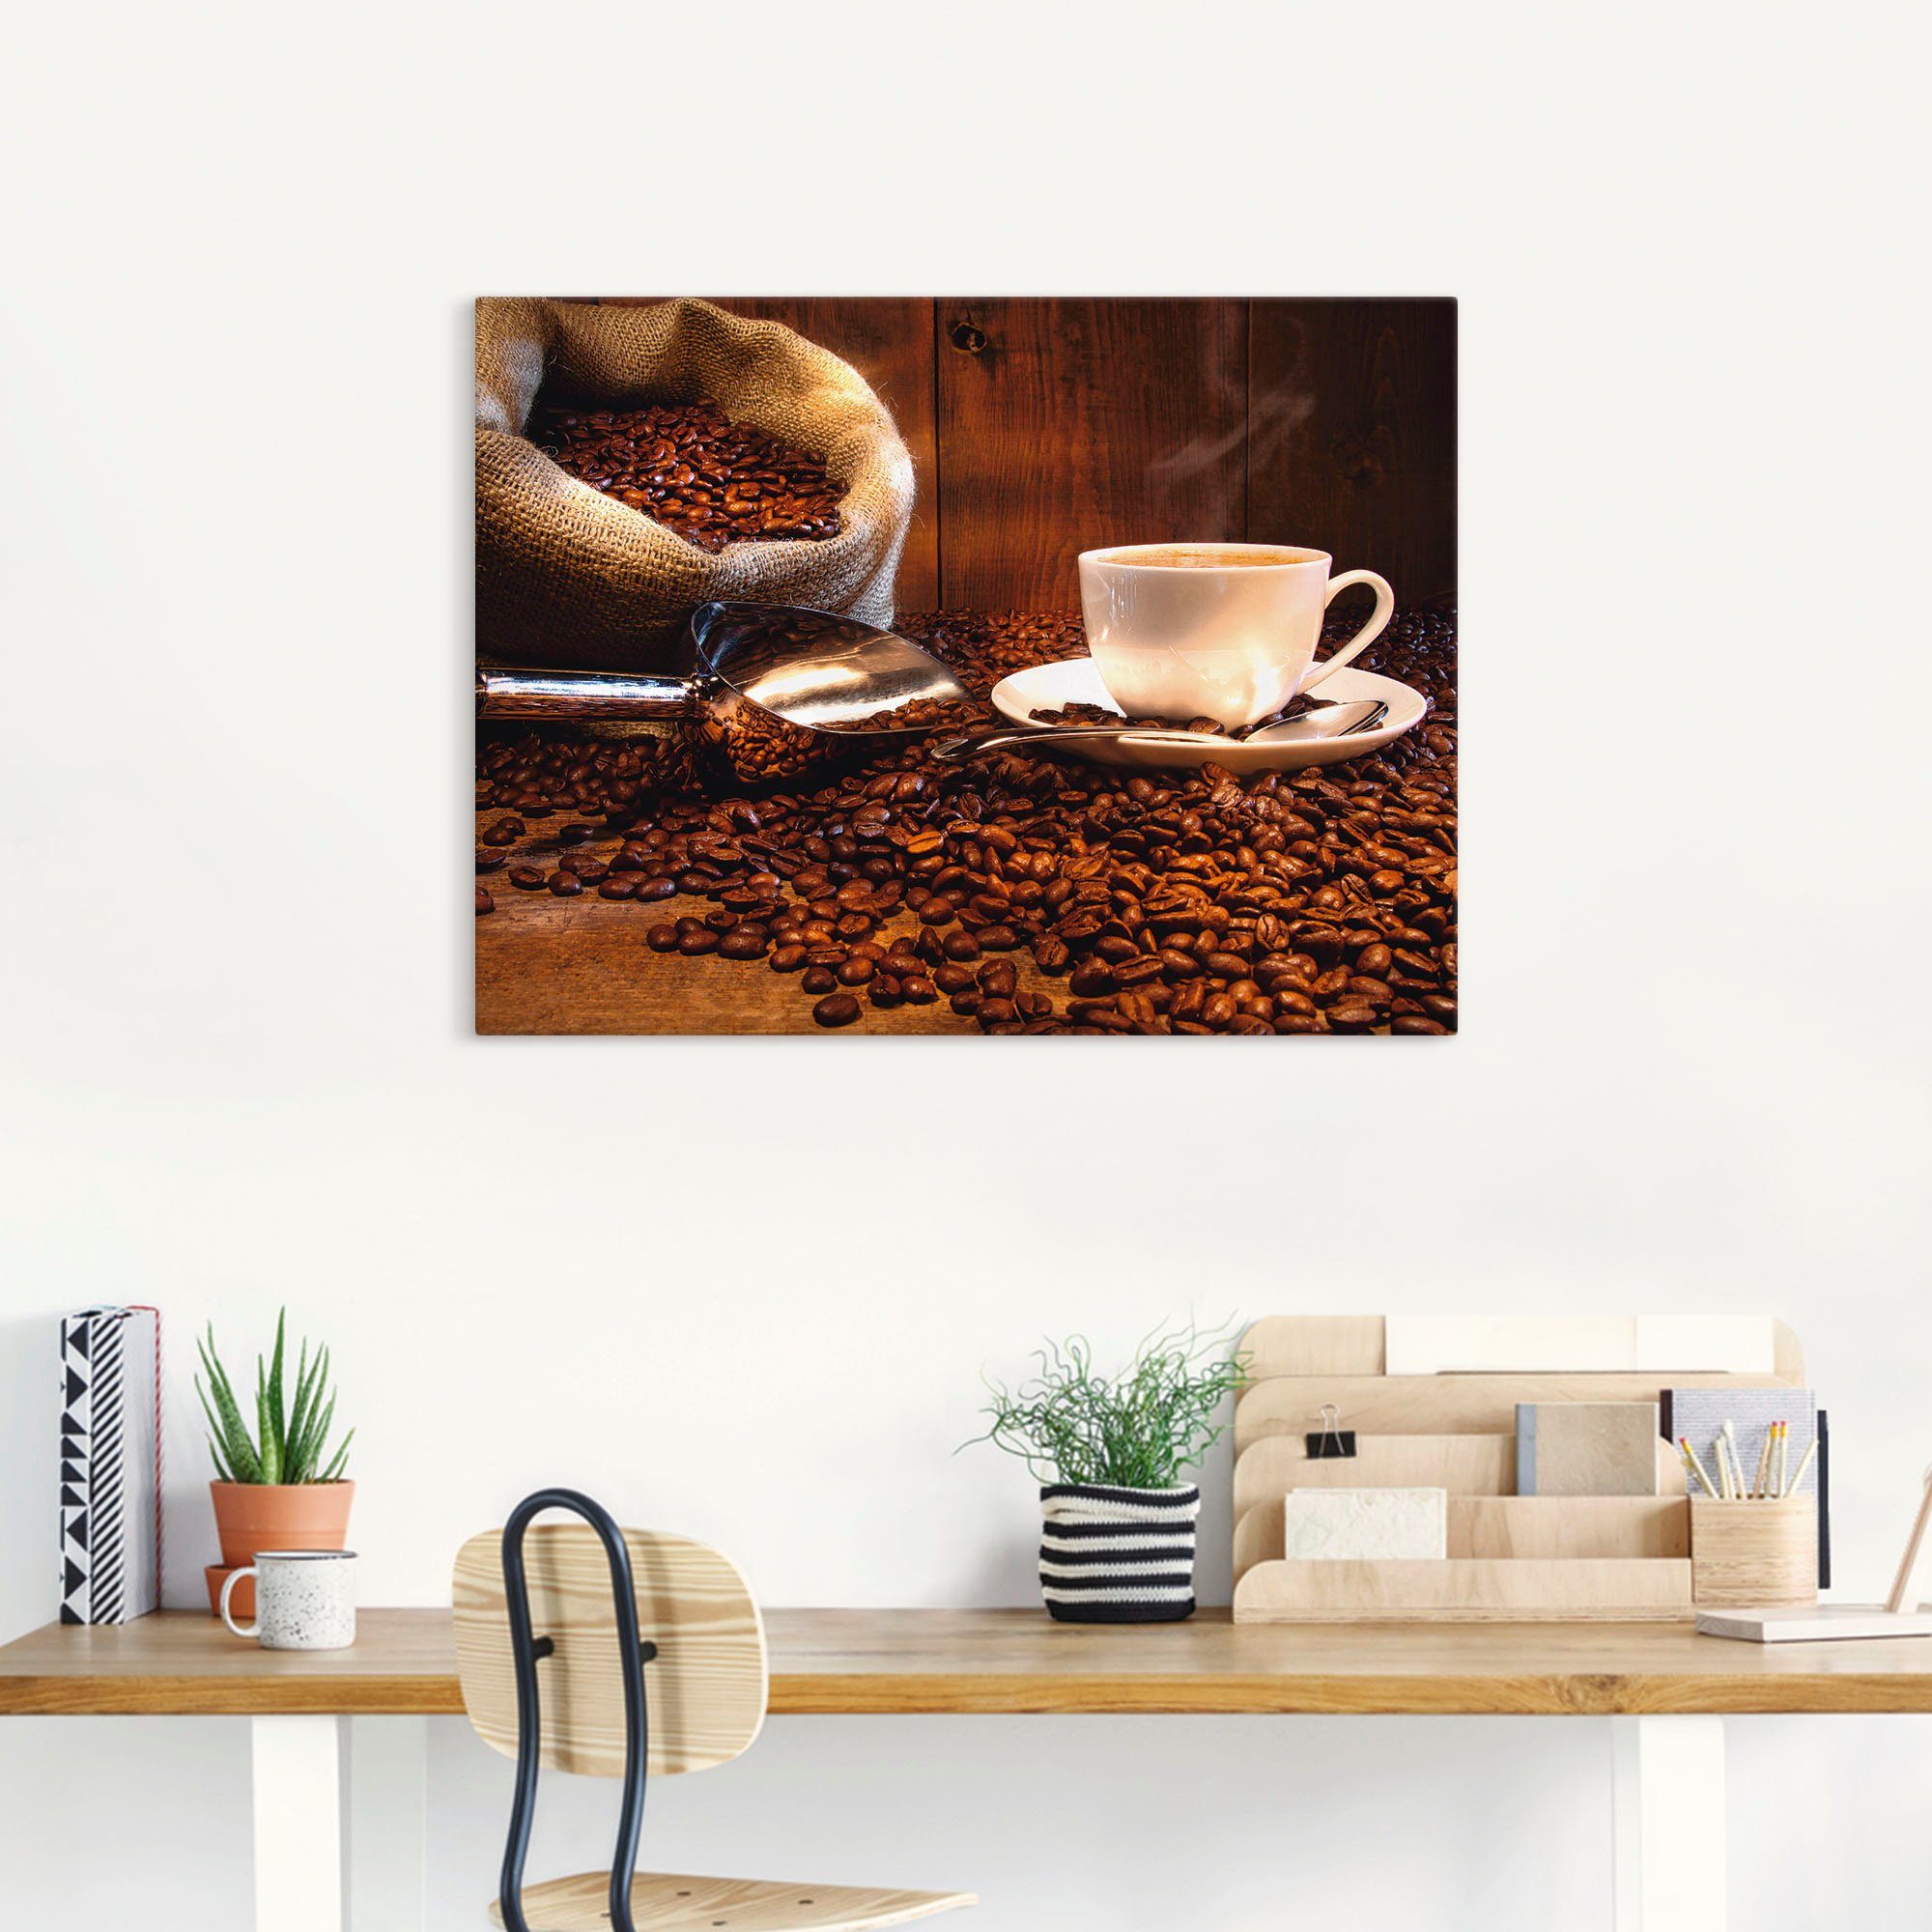 in Leinensack Wandbild Getränke Kaffeetasse Wandaufkleber oder Leinwandbild, (1 Tisch, Artland Poster und St), als Größen versch. auf